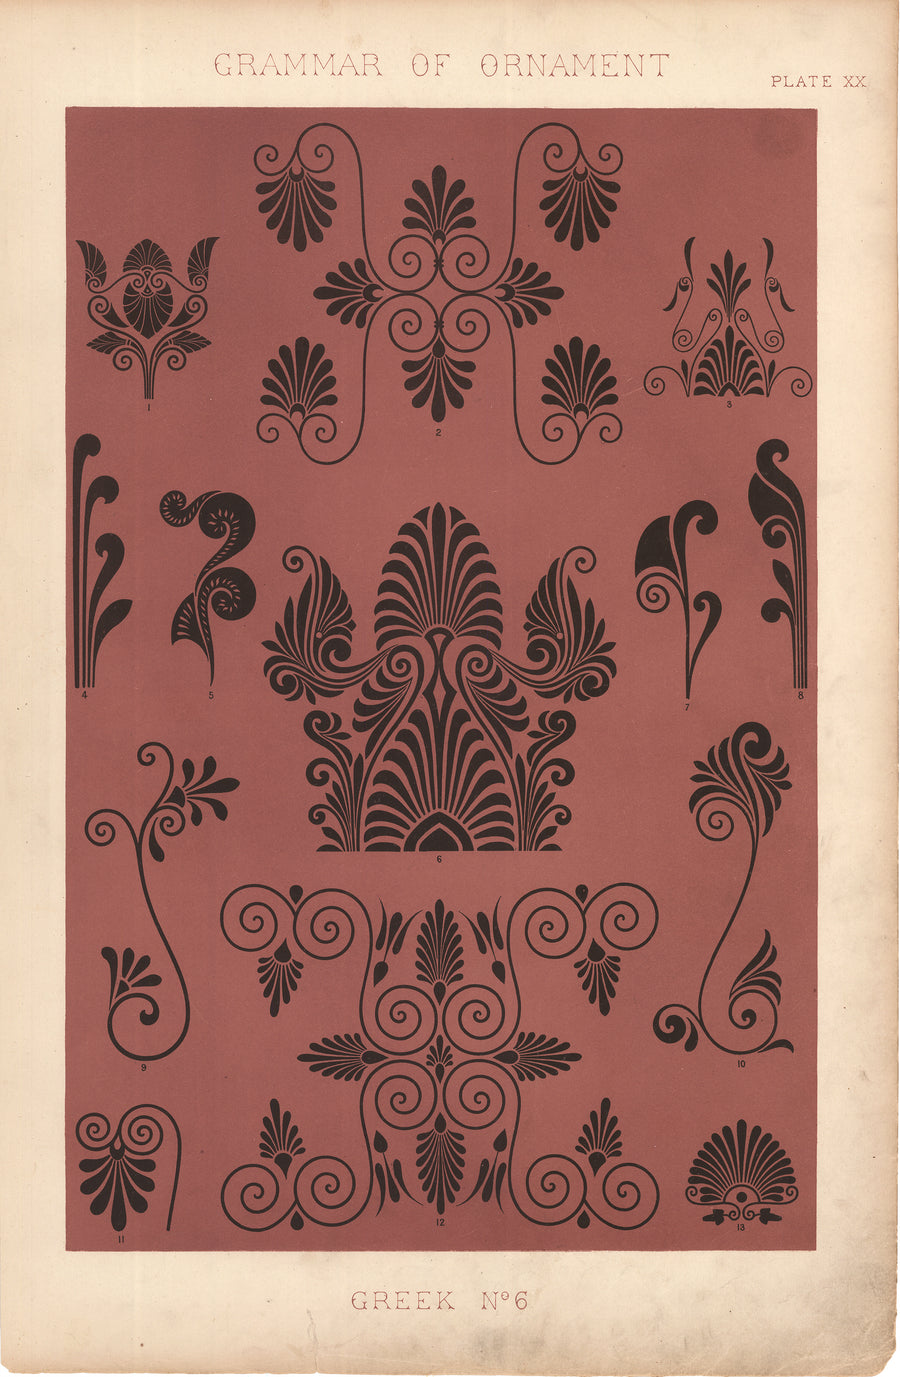 Antique Lithograph Print: Grammar of Ornament by Owen Jones, 1st edition 1856 - Greek No.6, Plate XX